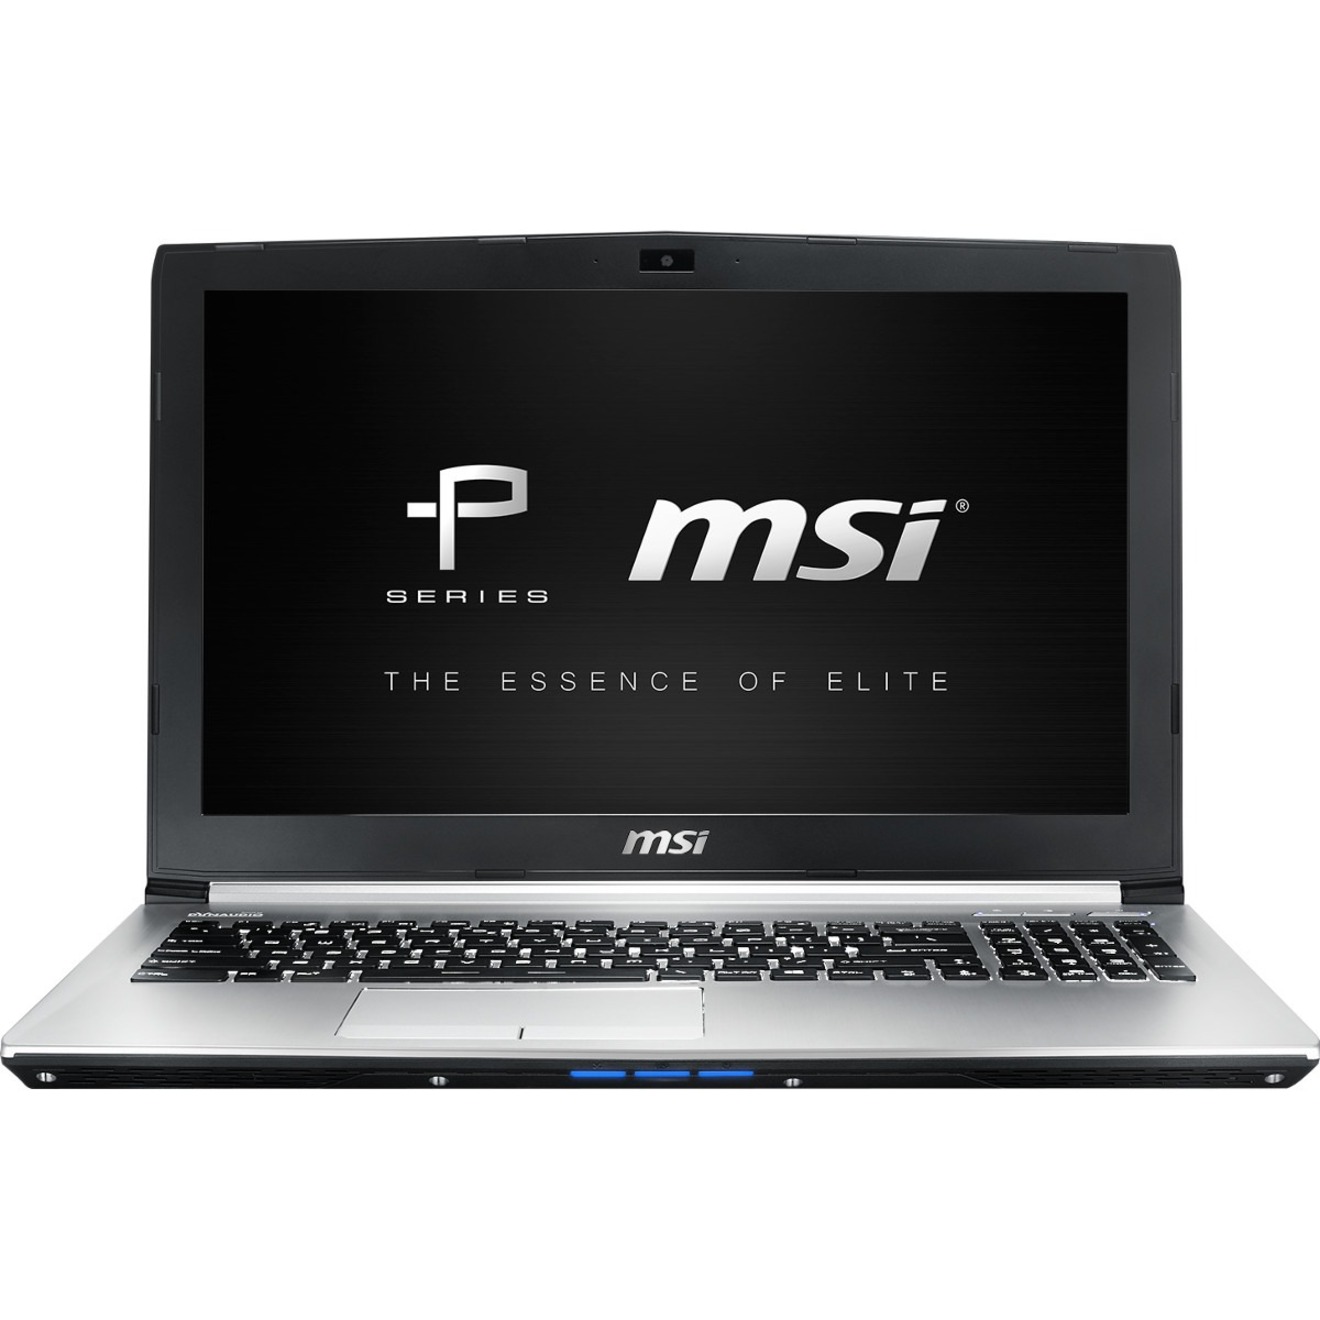 MSI 15.6" Full HD Laptop, Intel Core i7 i7-6700HQ, 1TB HD, DVD Writer, Windows 10, PE60 6QE-031US - image 1 of 7